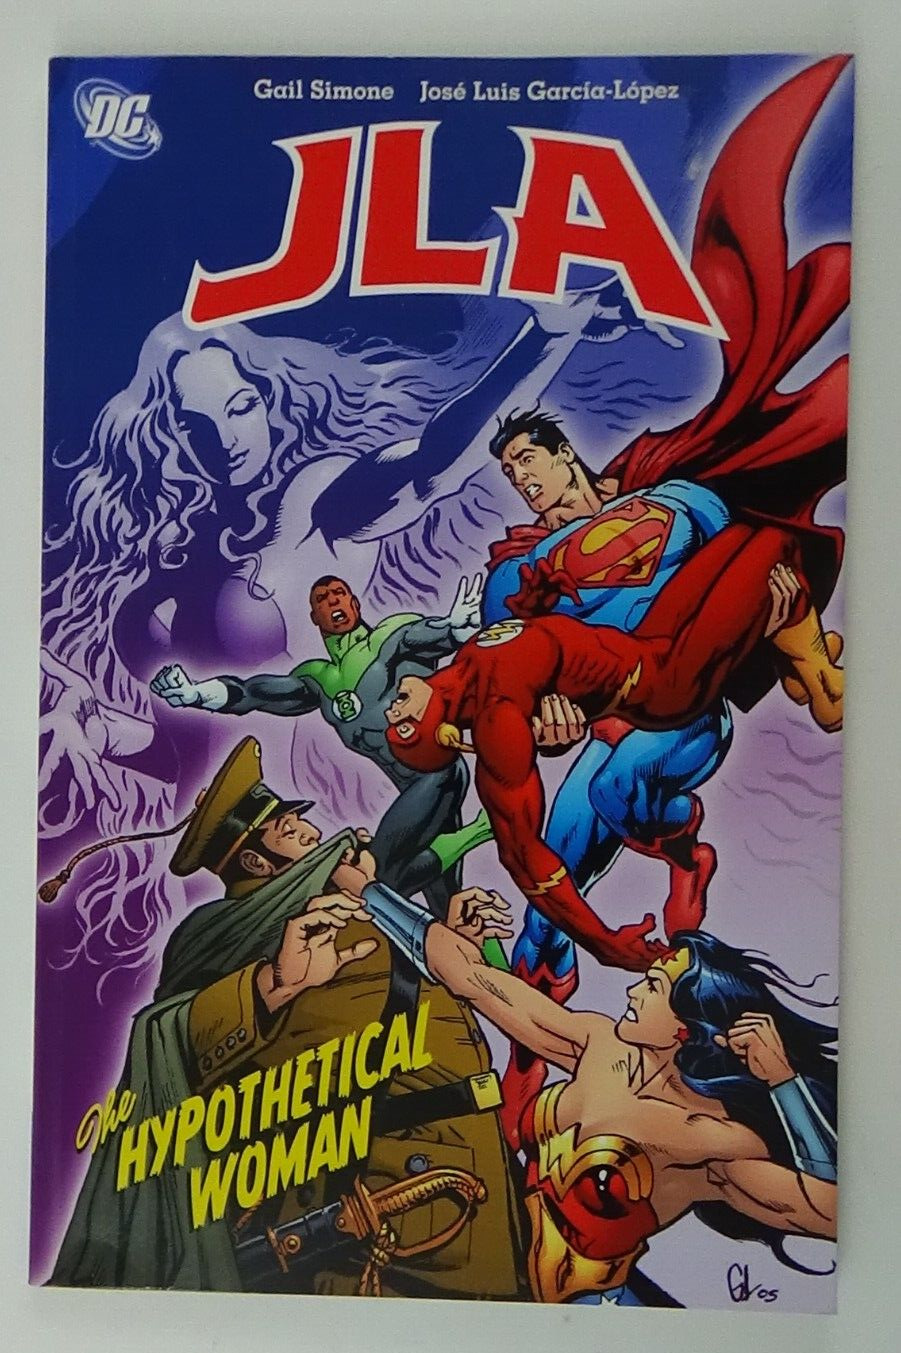 JLa: The Hypothetical Woman (DC Comics March 2008) Paperback #08